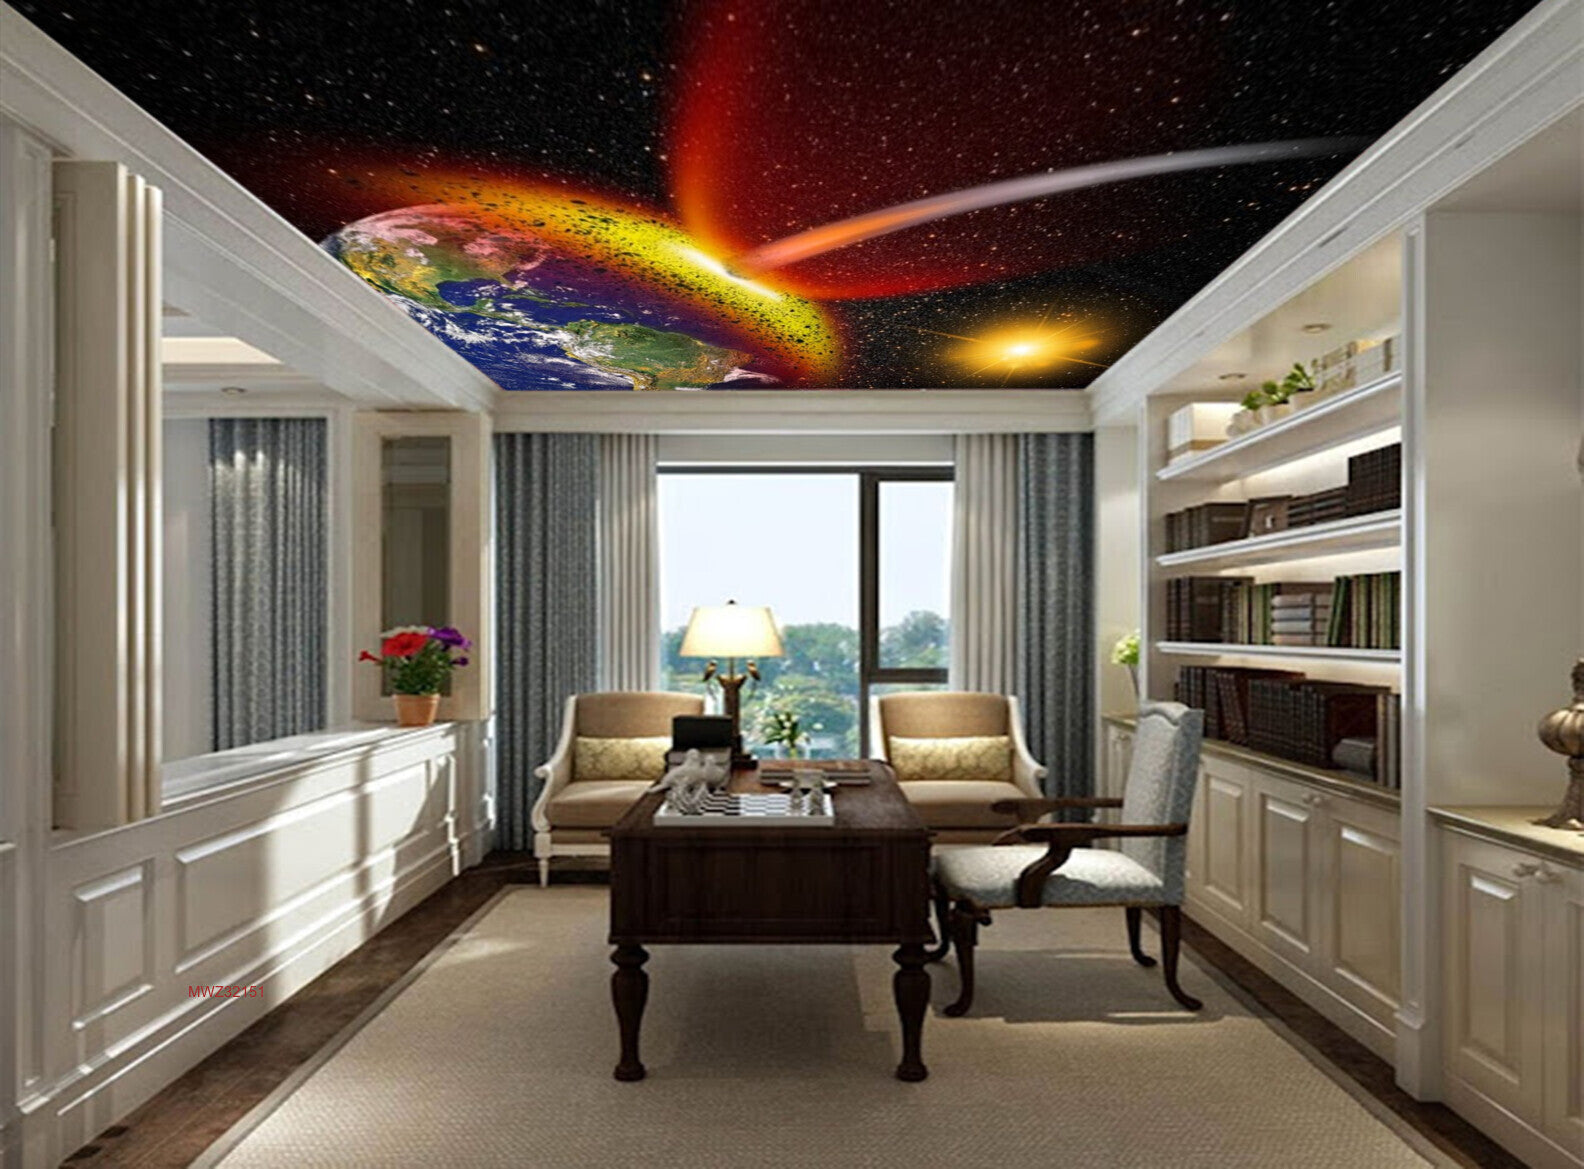 Avikalp MWZ3215 Earth Sun Planets HD Wallpaper for Ceiling